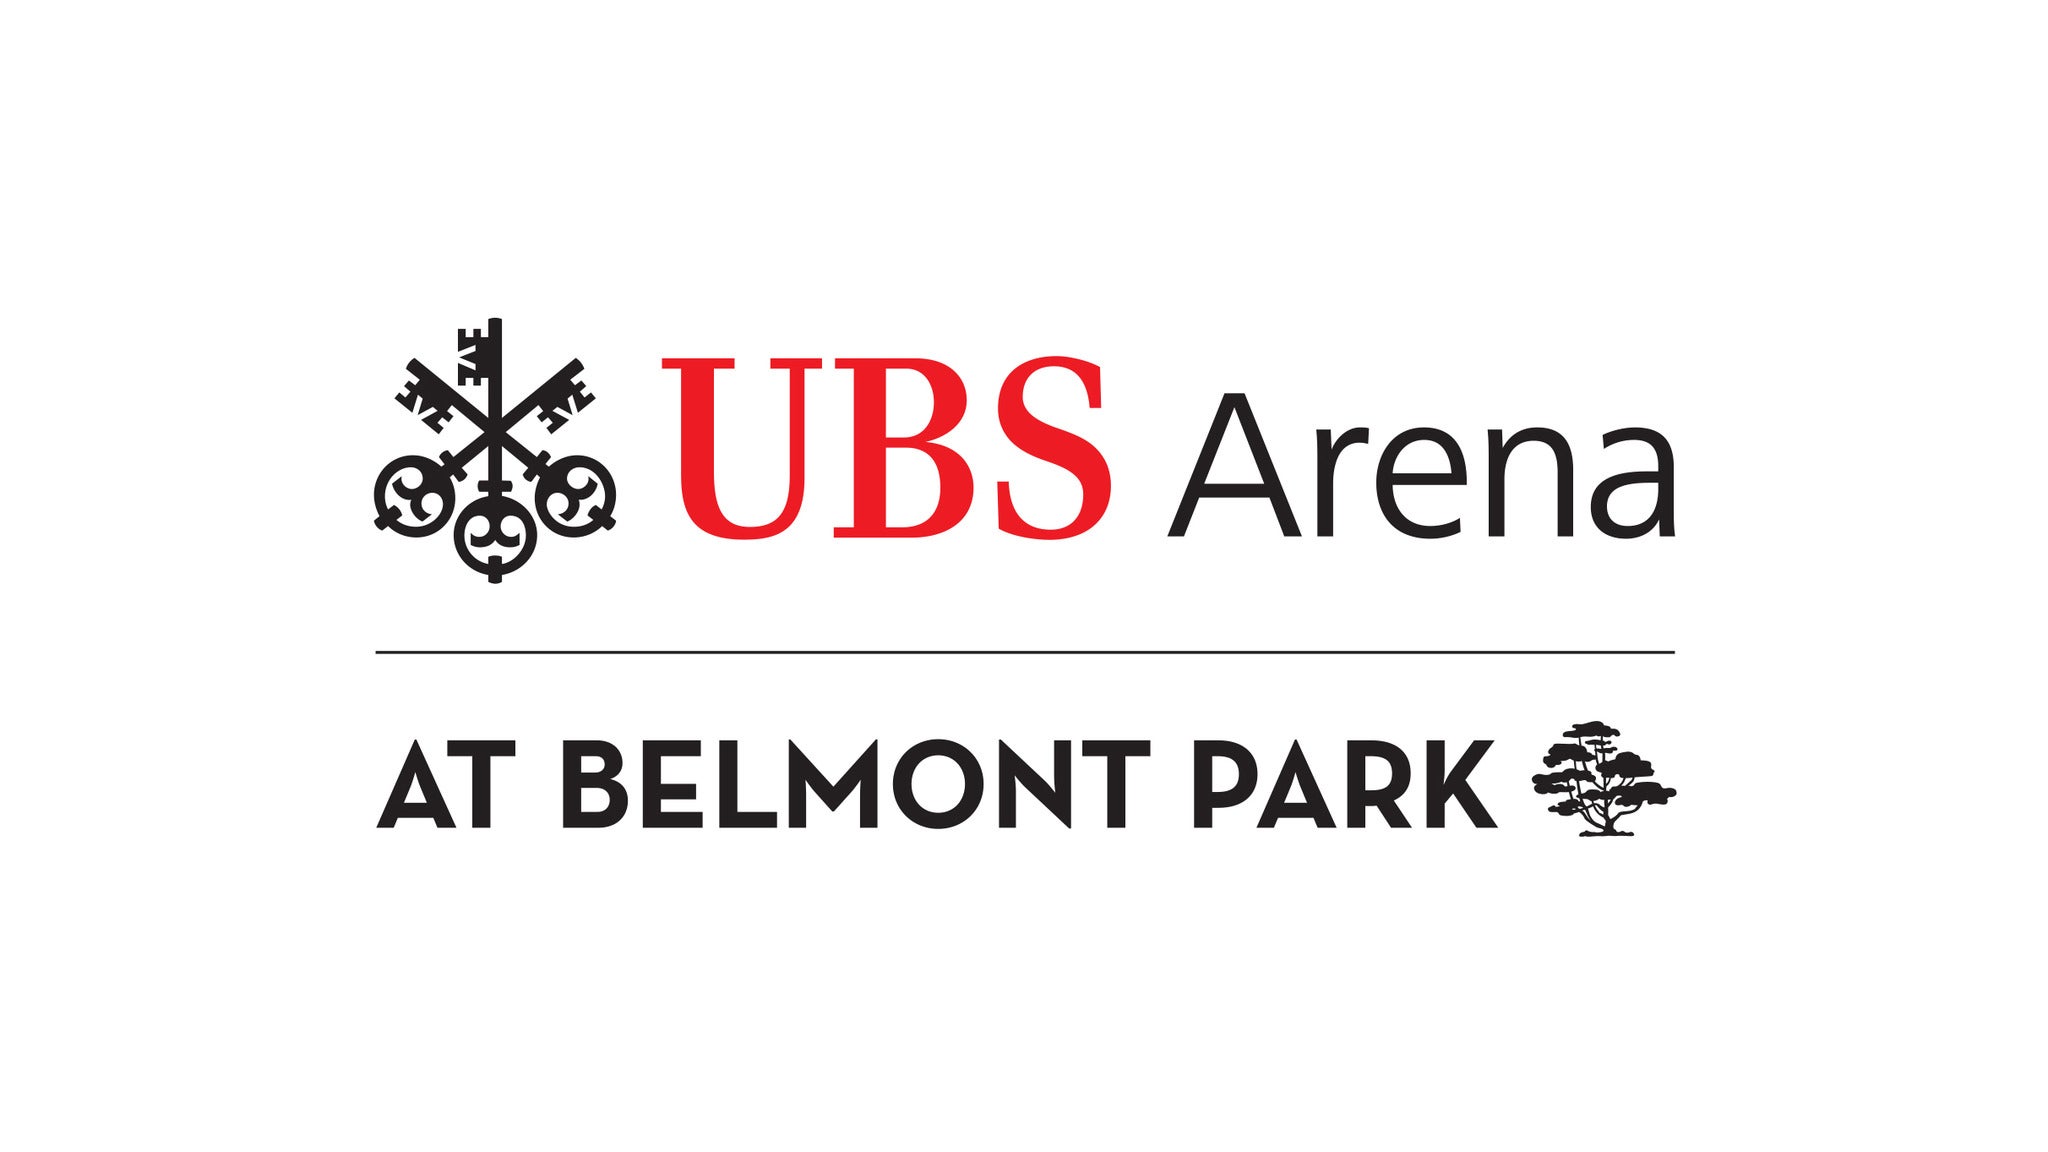 UBS Arena Parking: Disney On Ice in Belmont Park promo photo for Internet presale offer code